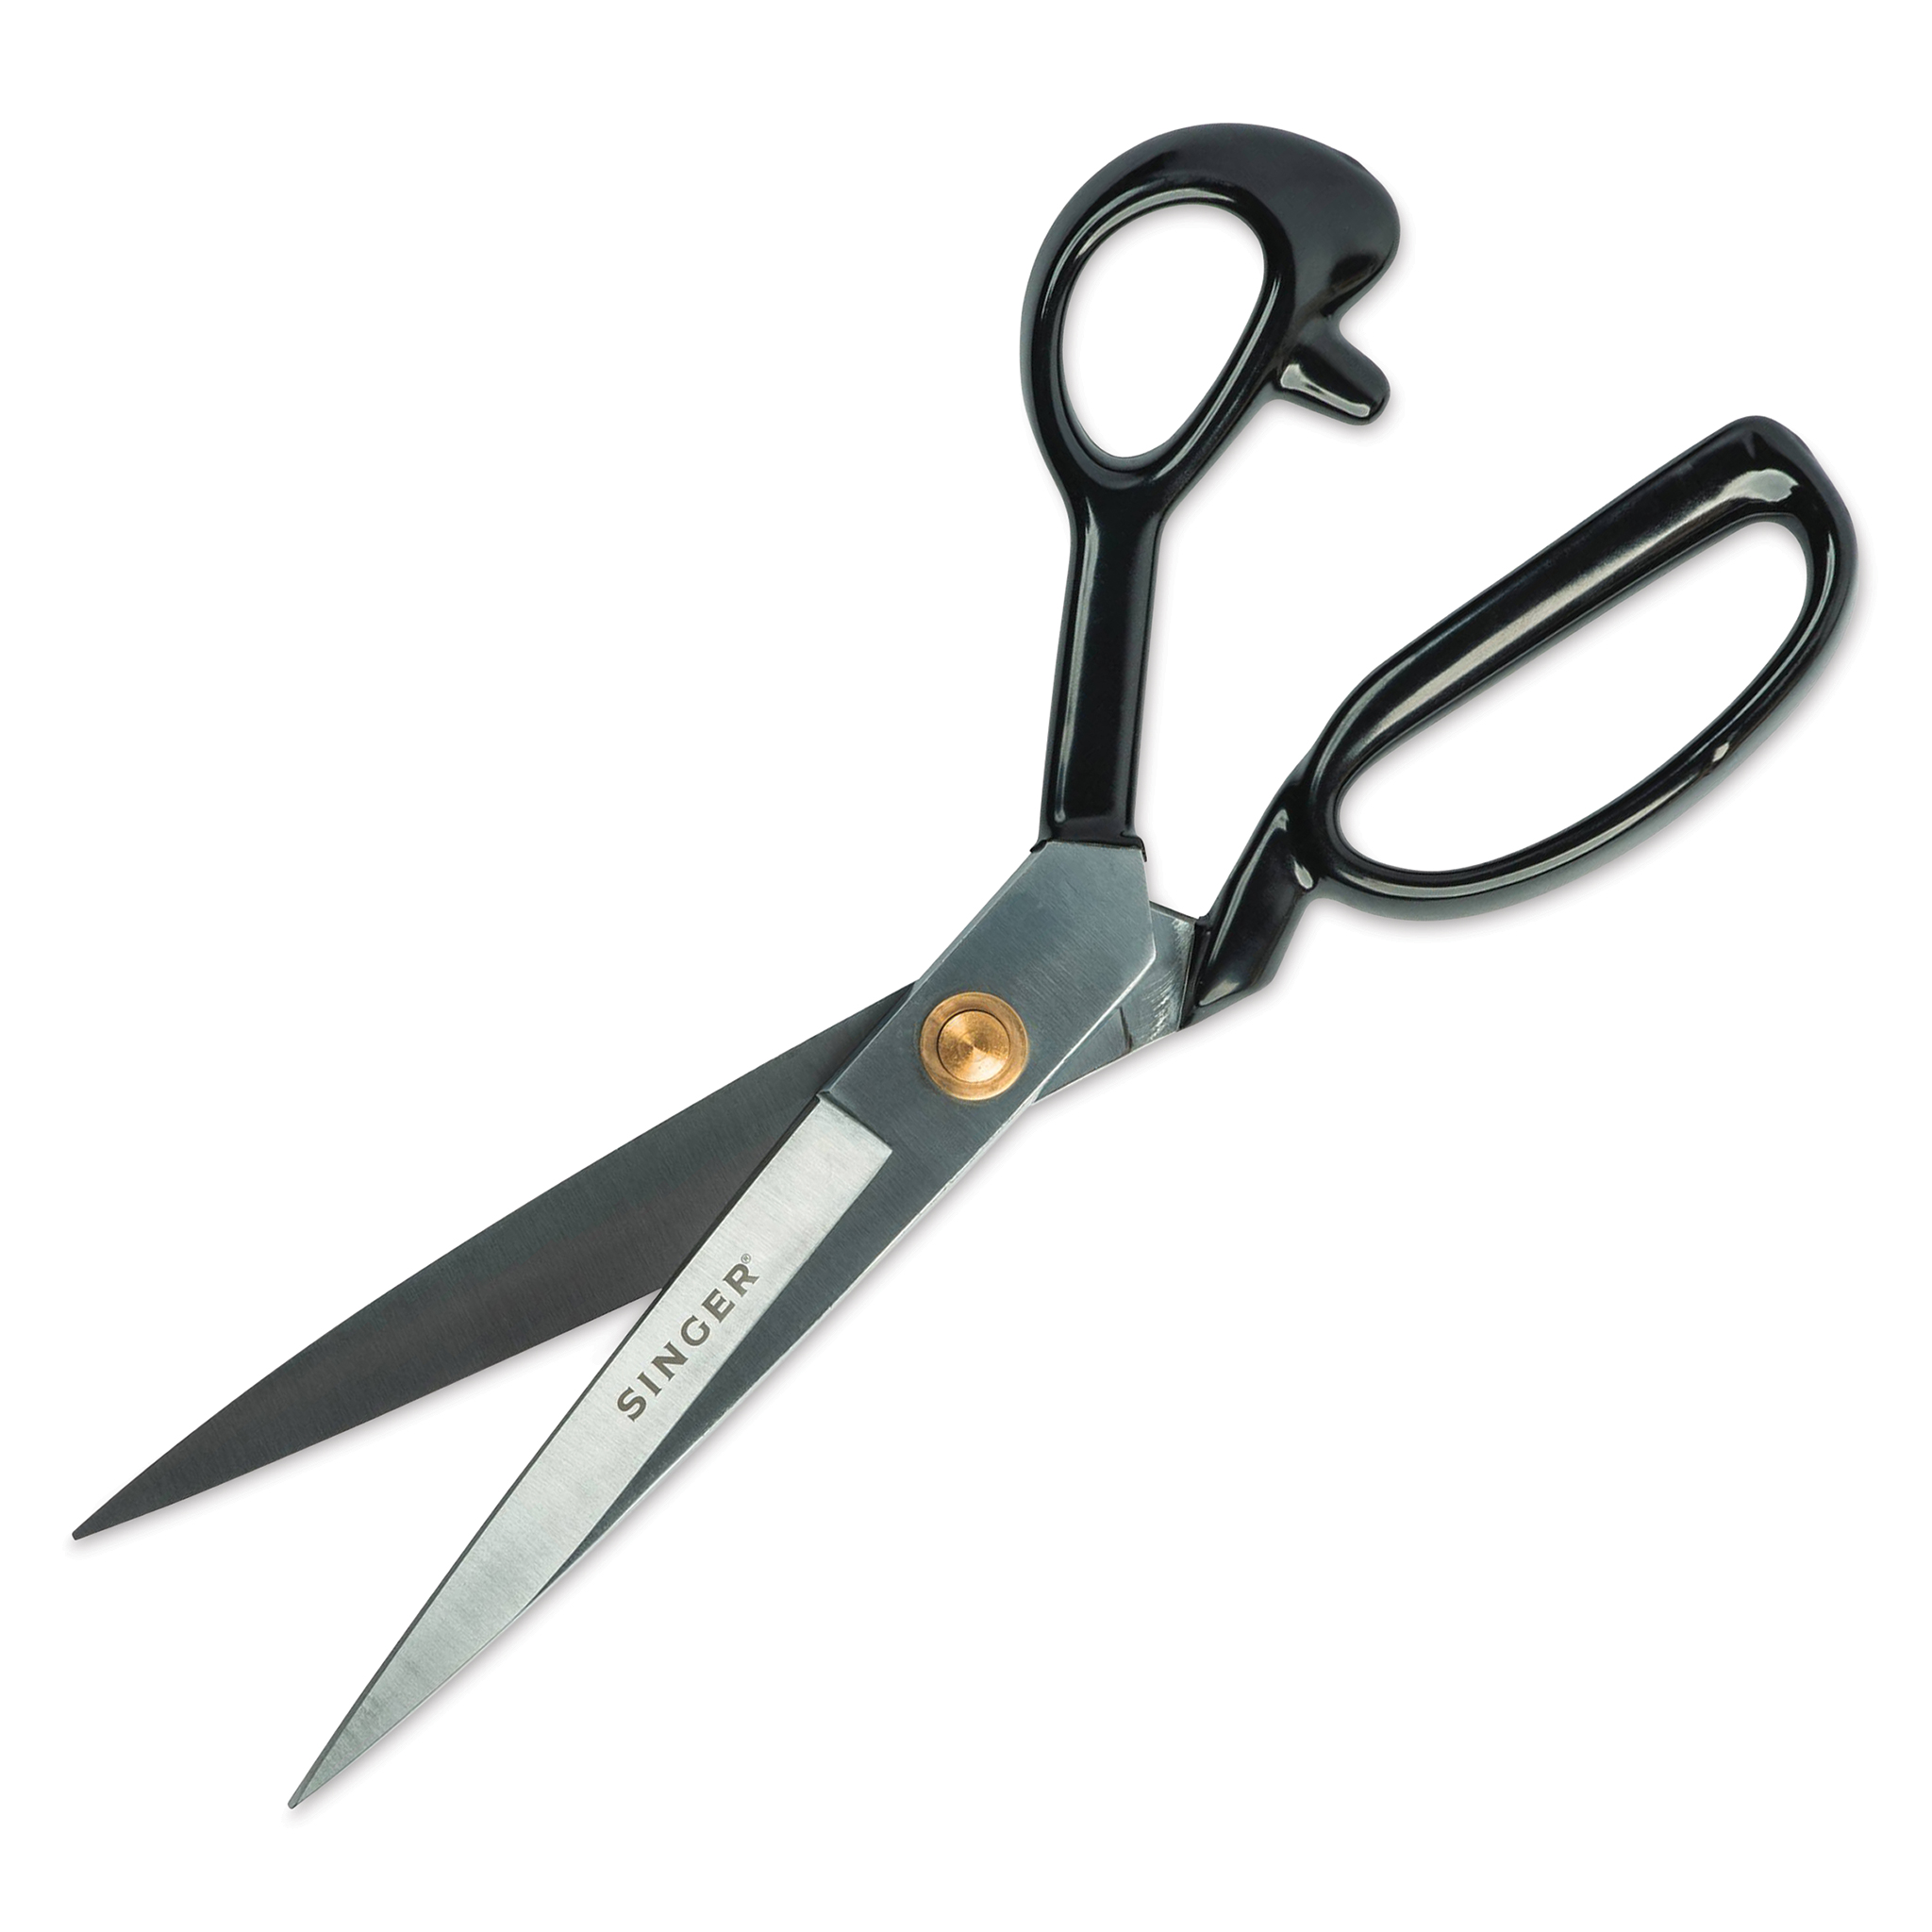 Dyno Sewing - SINGER Scissors & Cutting Tools